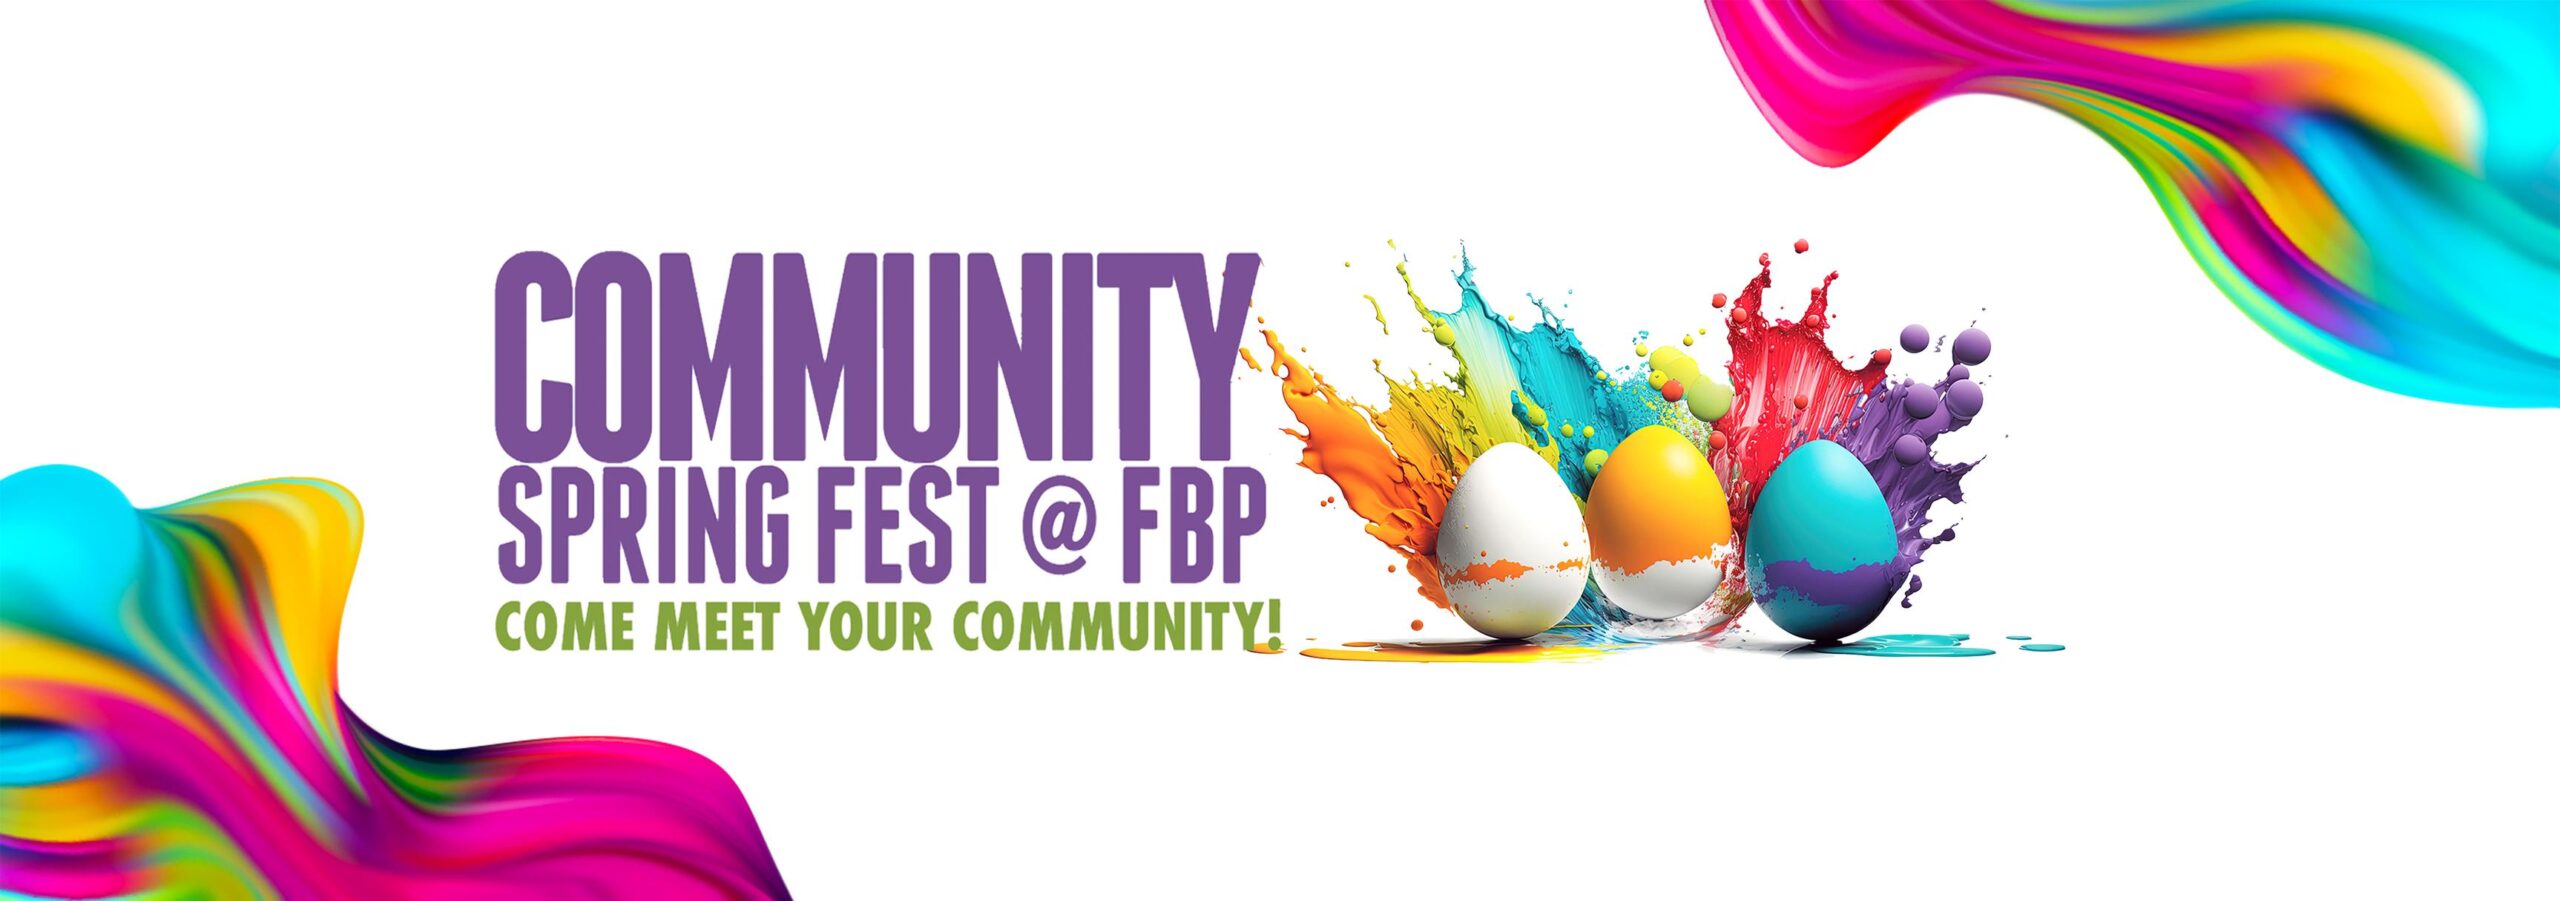 Community Spring Fest at FBP